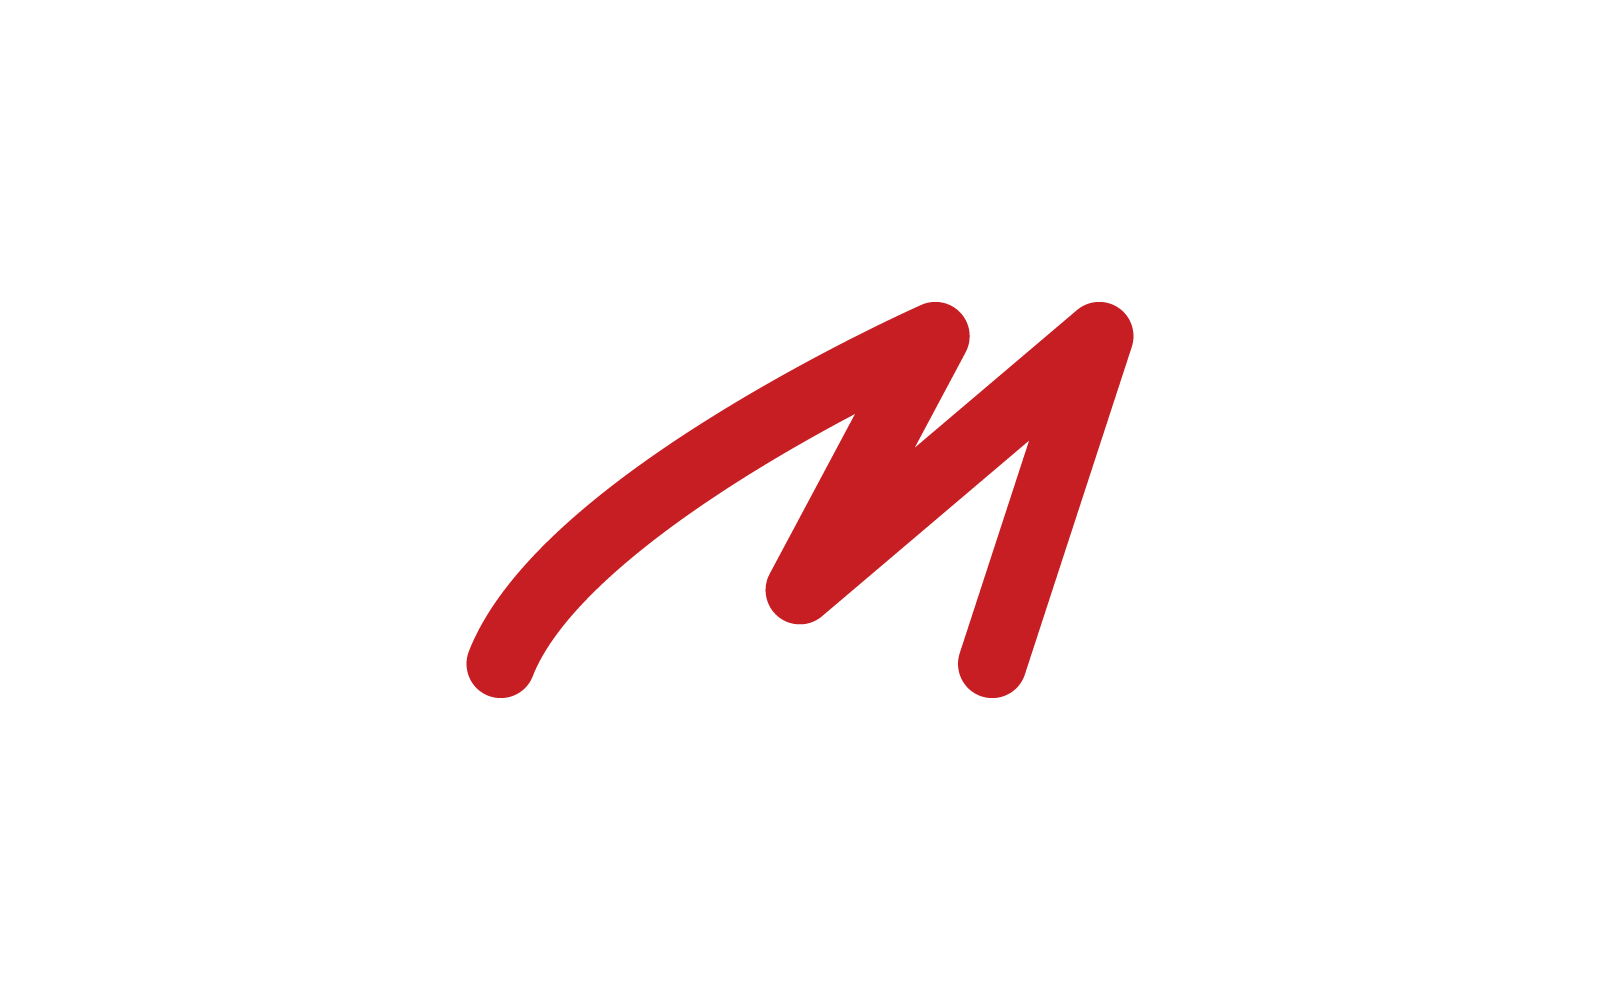 M or N Letter logo business template illustration